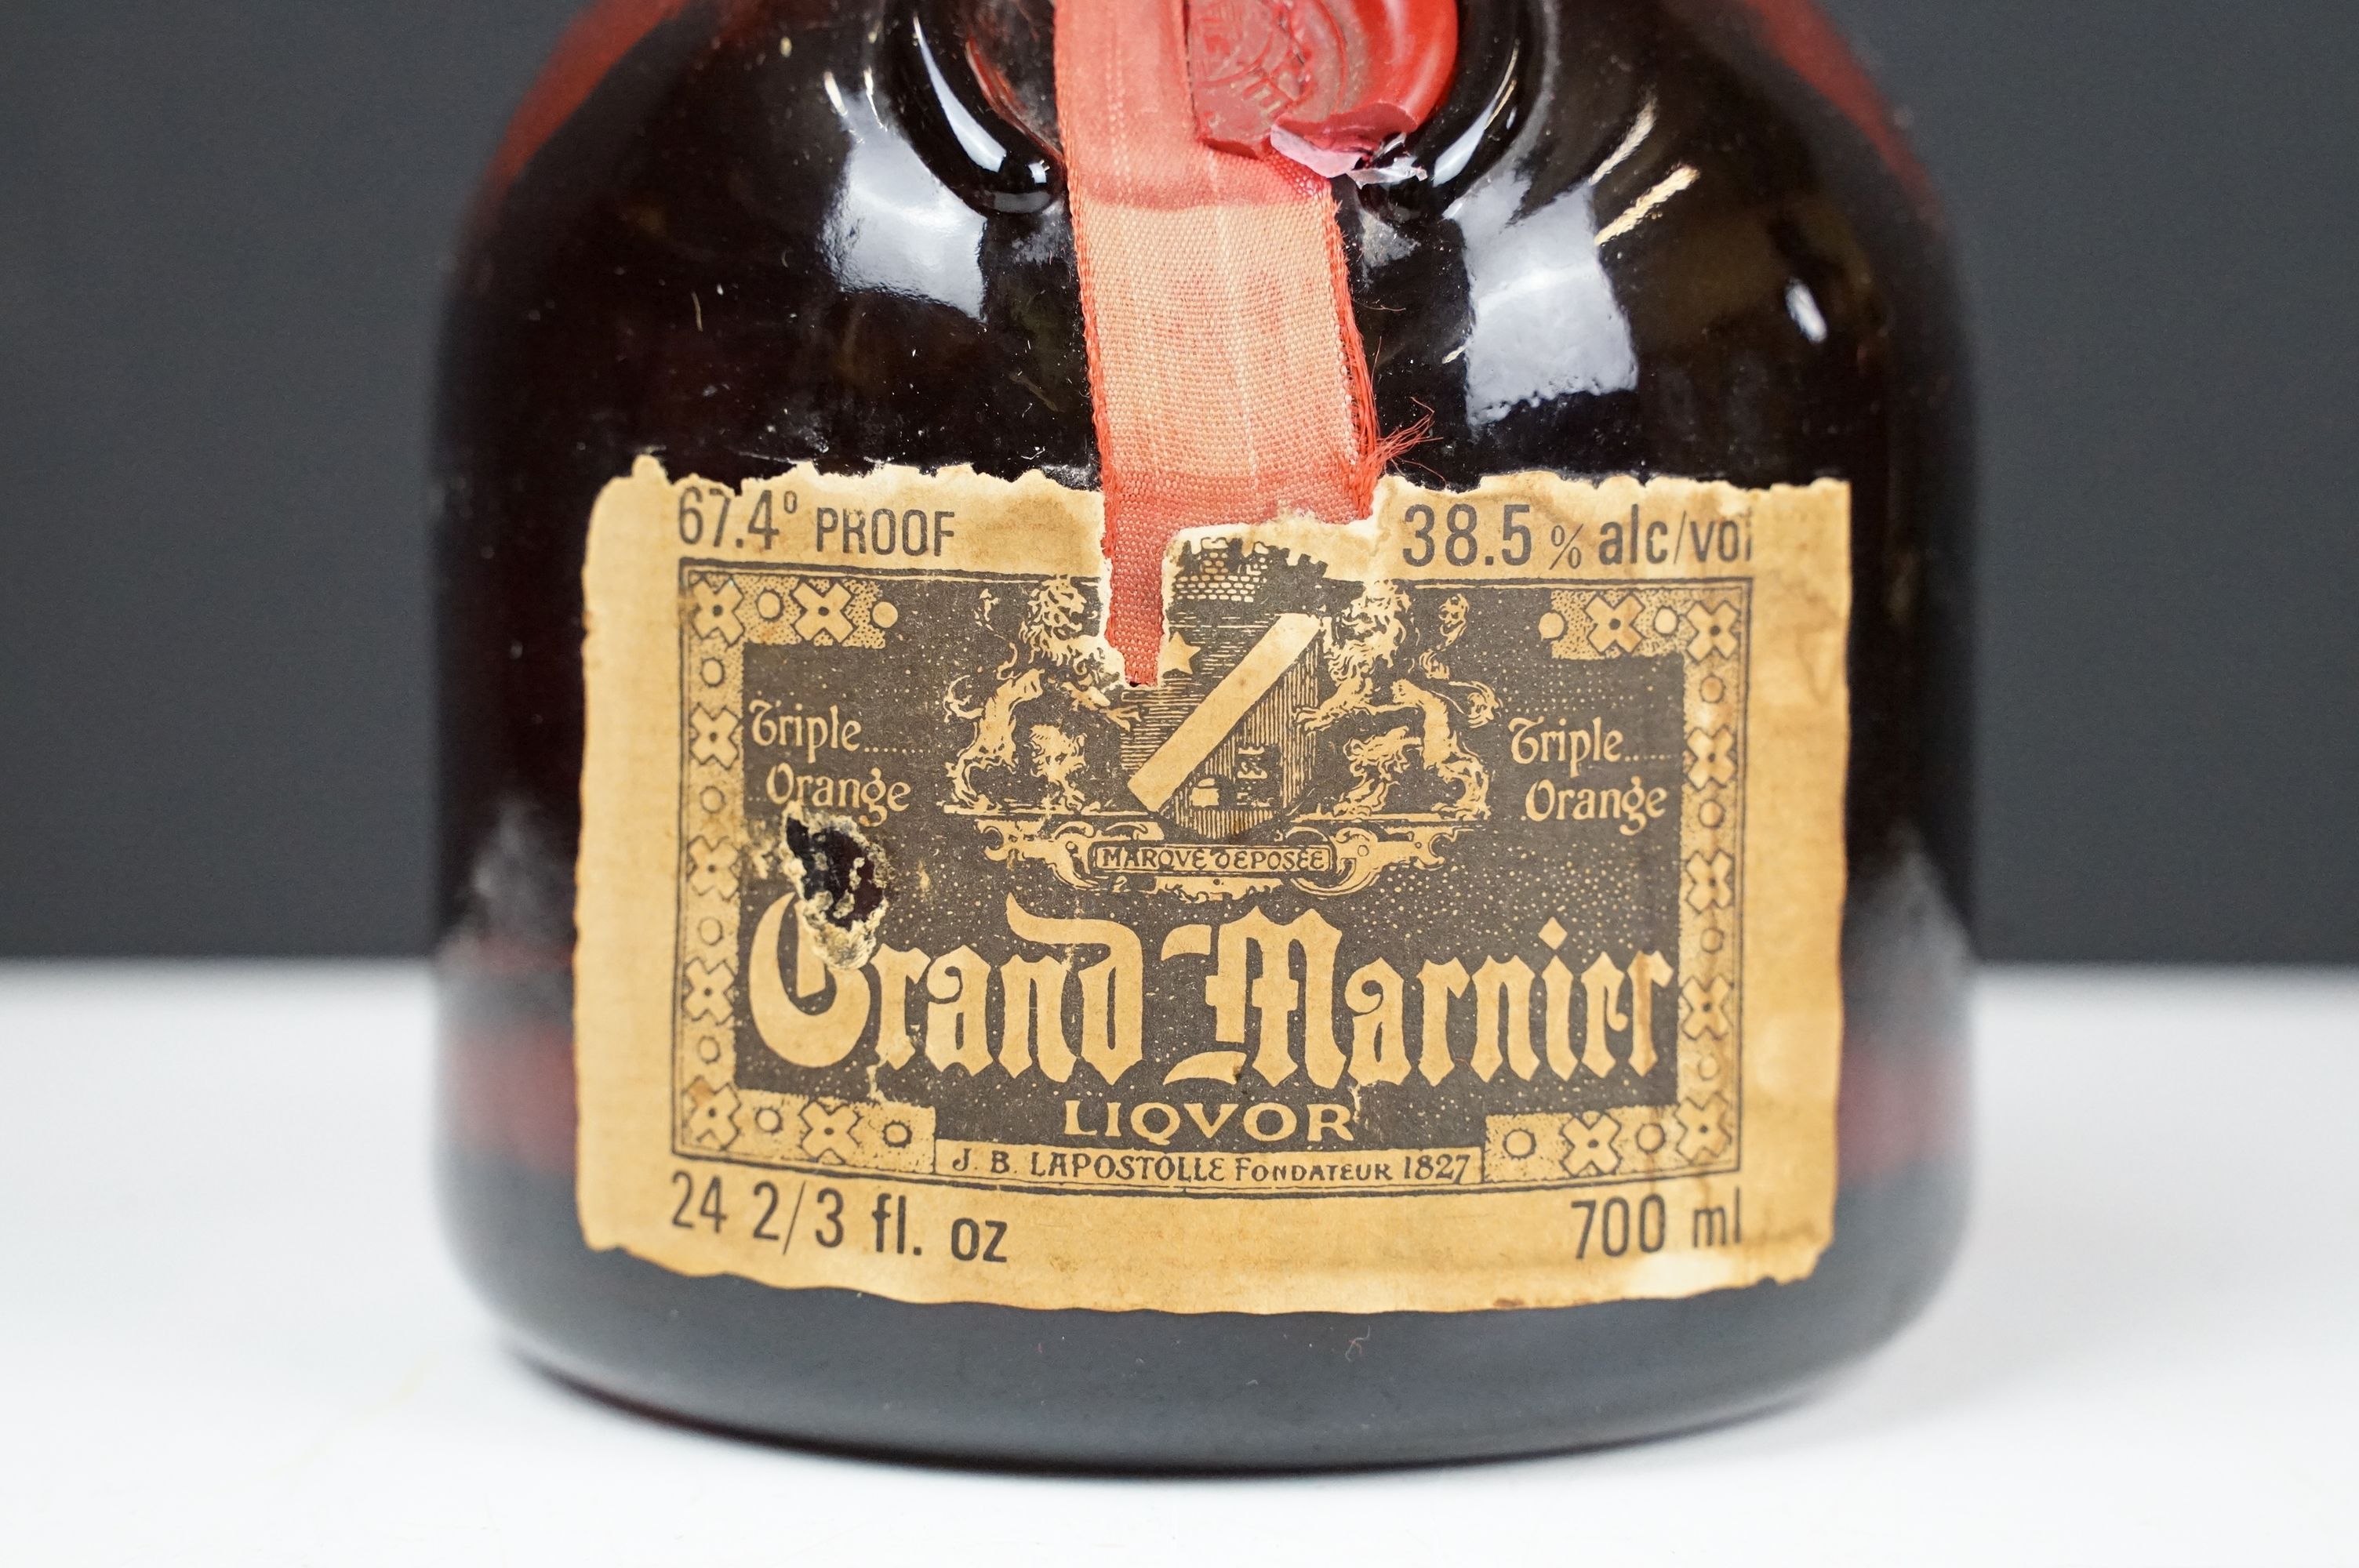 Orange and Fine Old Grand Marnier Cognac Brandy liquor. 67.4% proof 24 2/3 fl oz. Sealed. Circa - Image 2 of 6